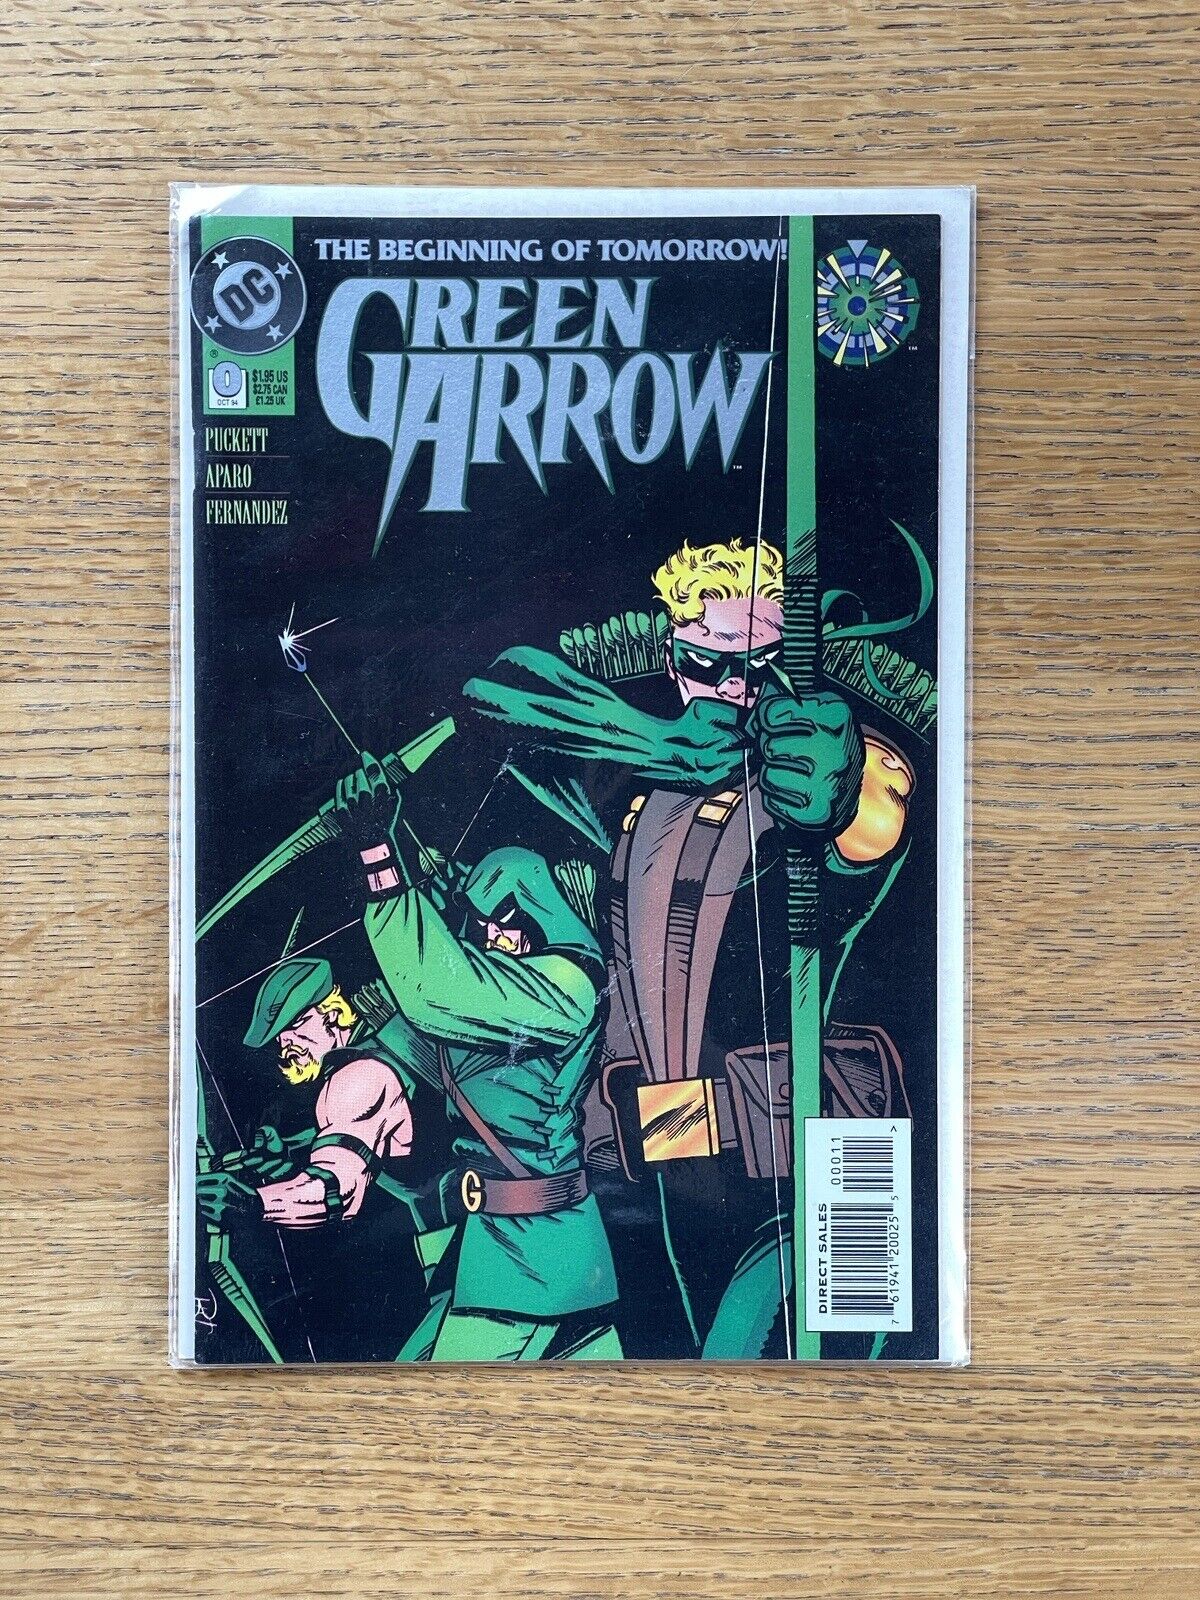 Green Arrow #0 In Good Condition (DC Comics, October 1994)